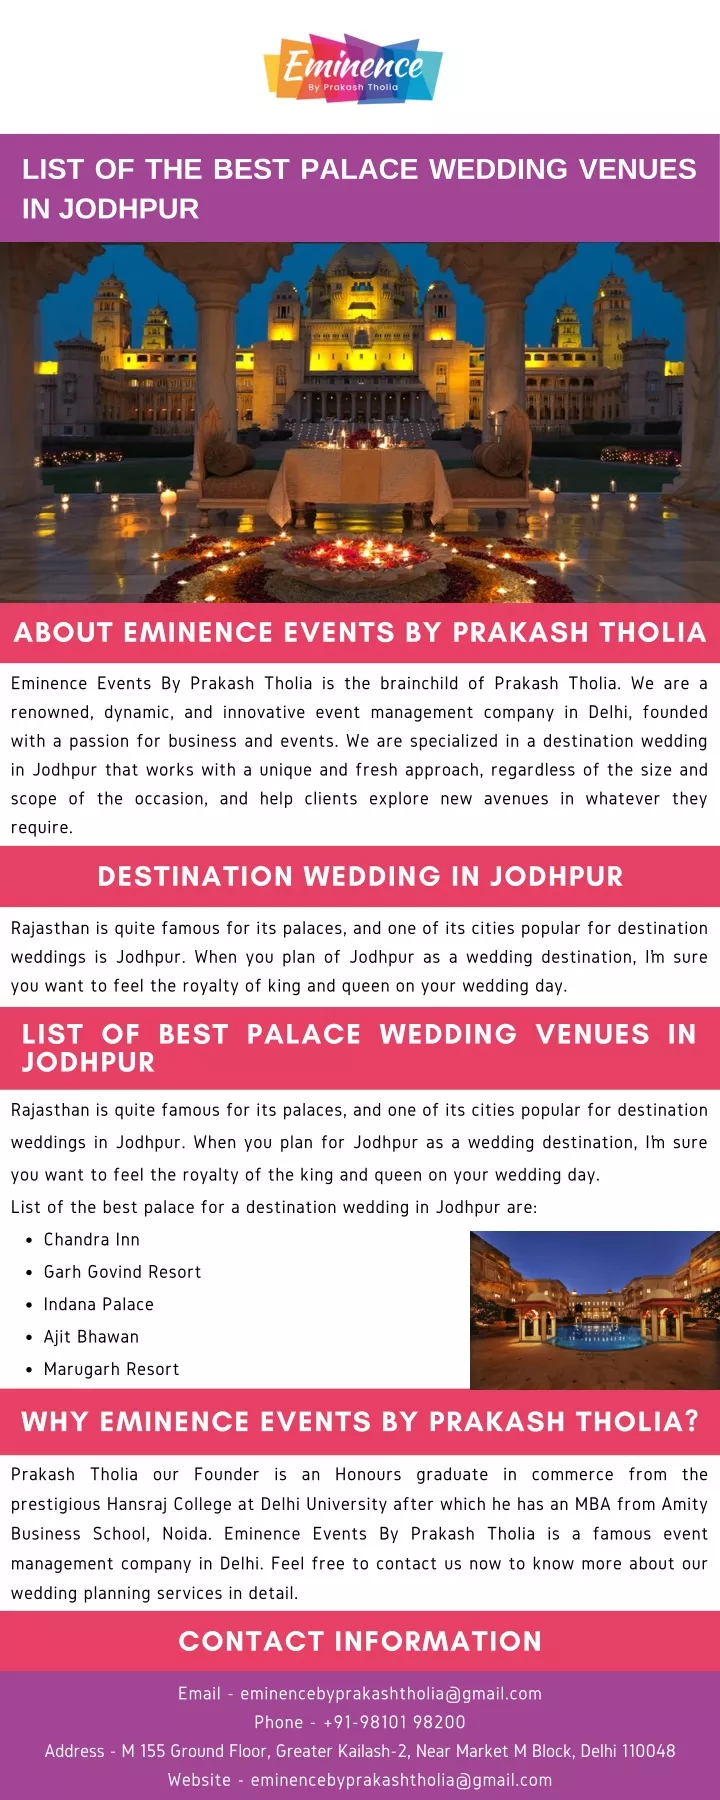 list of the best palace wedding venues in jodhpur